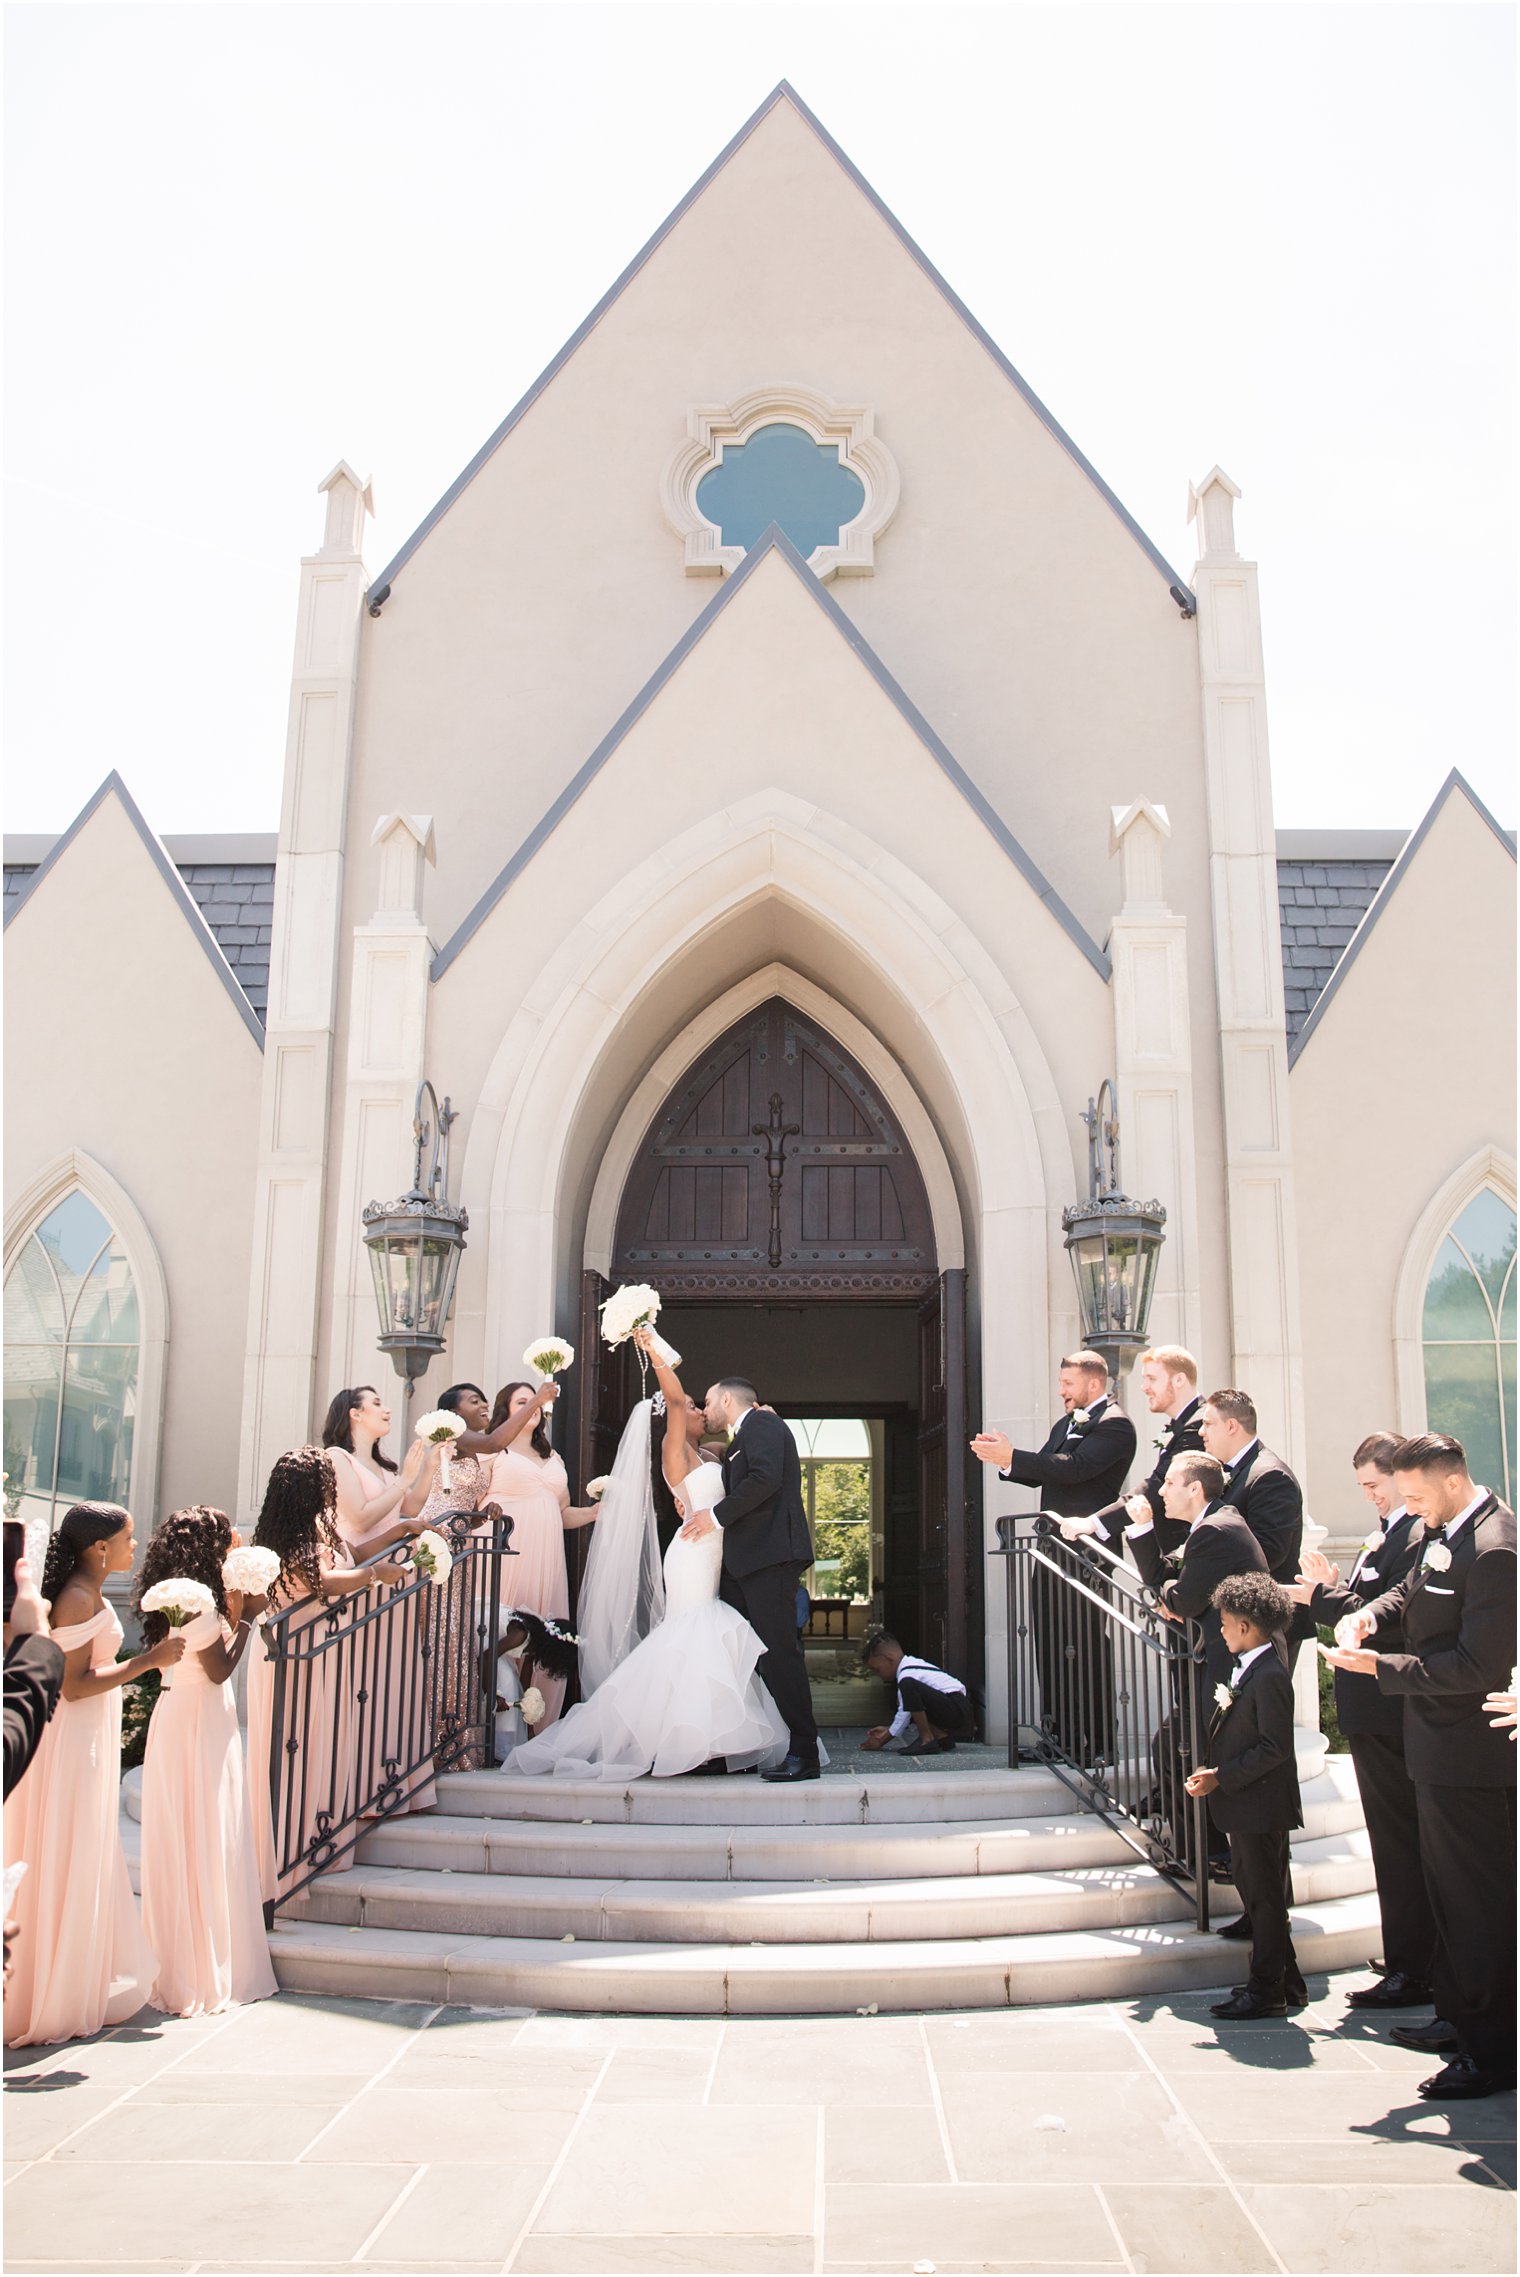 Wedding ceremony exit | Biracial Wedding at Park Chateau Estate